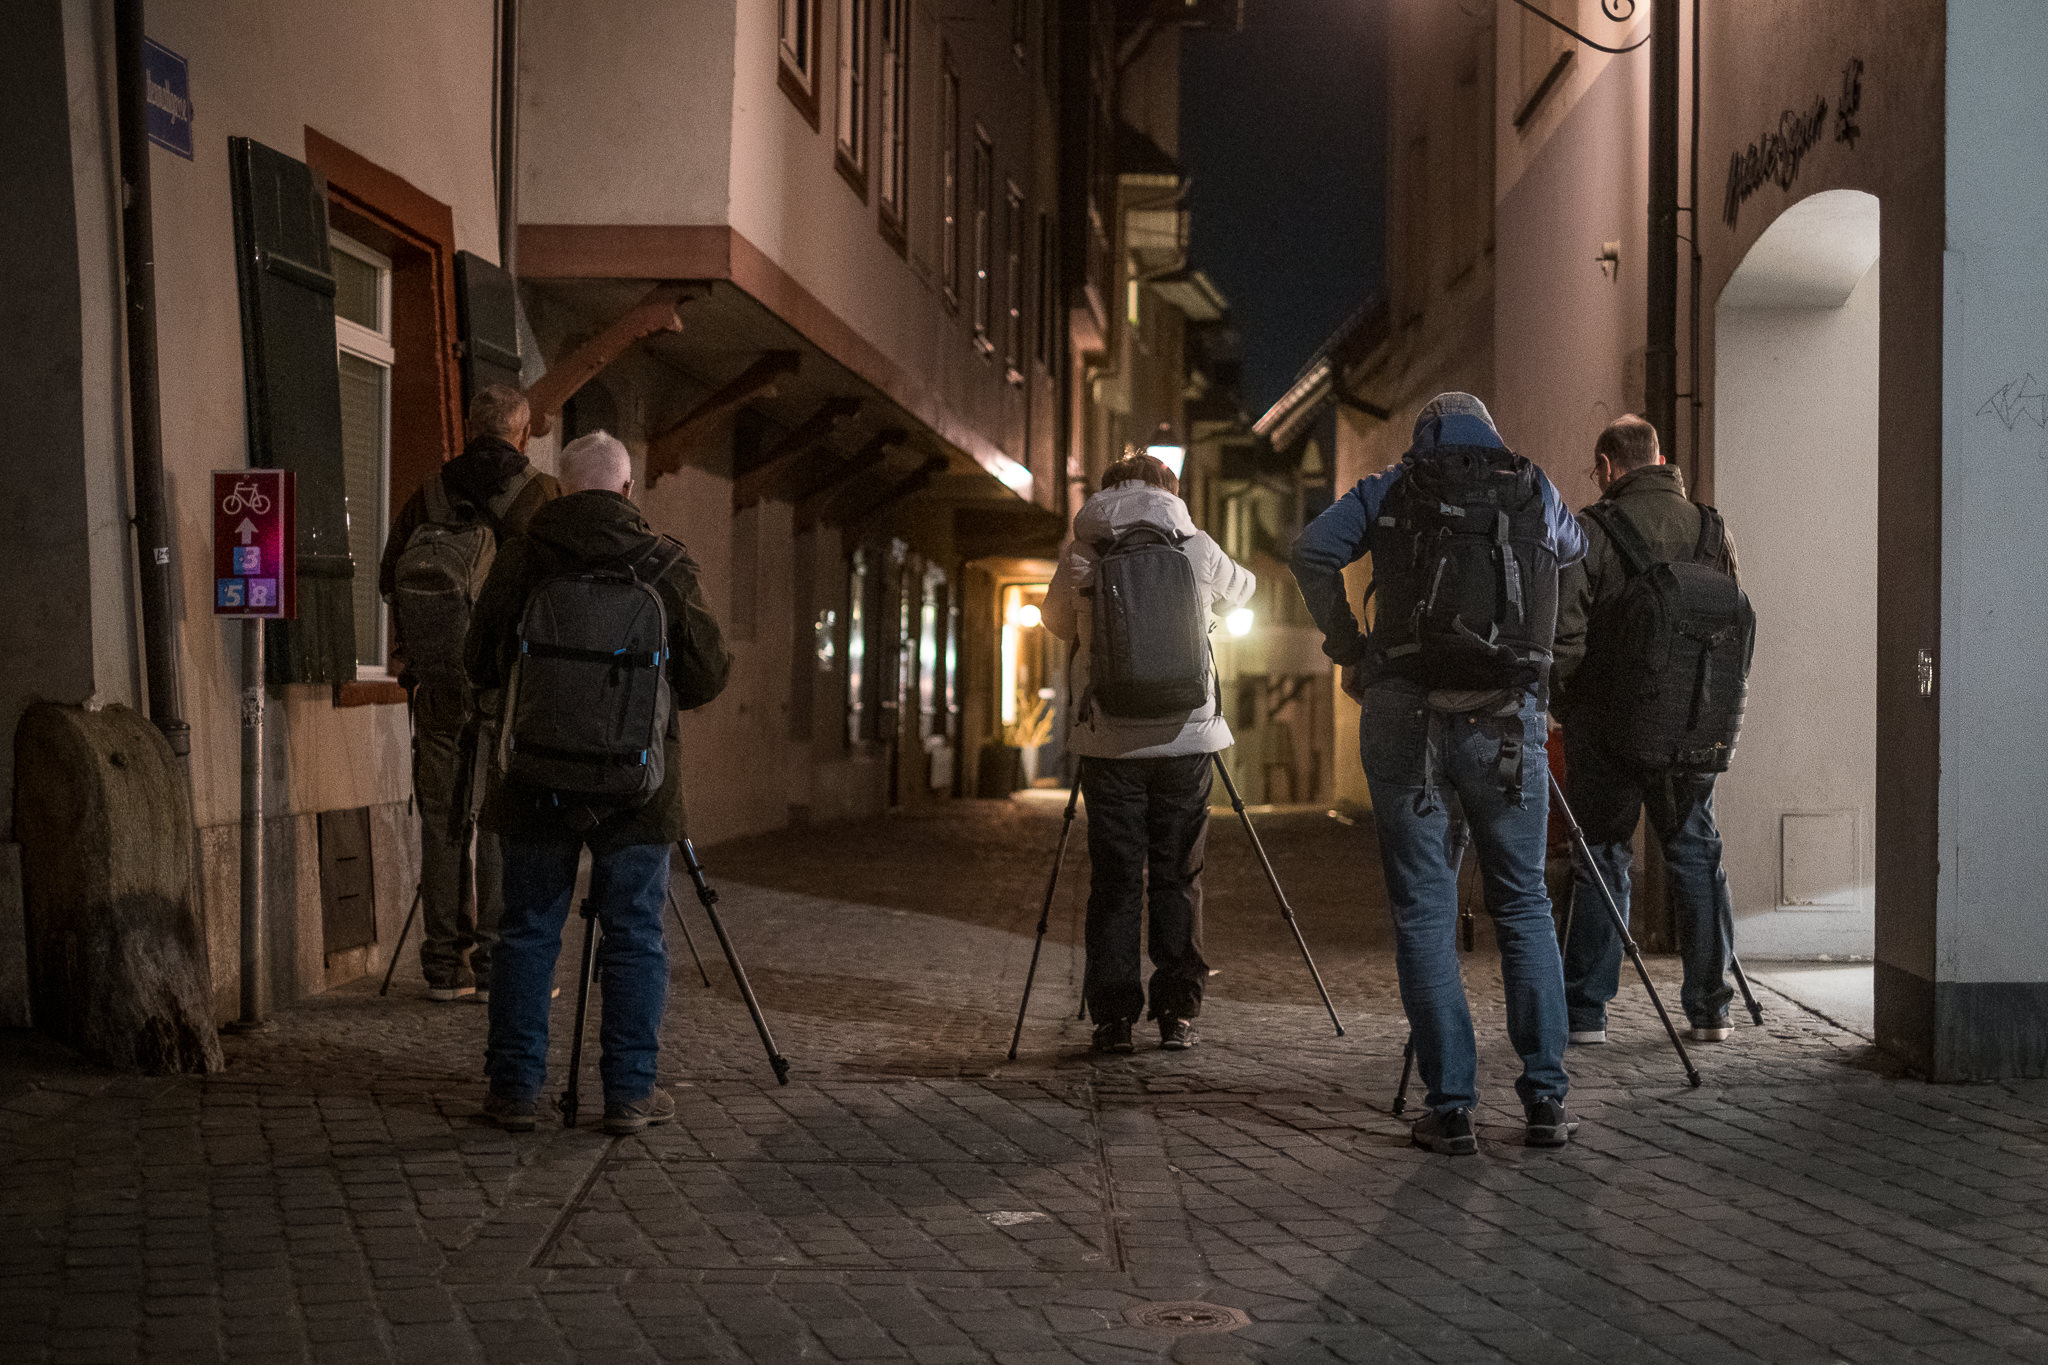 FotoEvent Aarau im Dunkeln